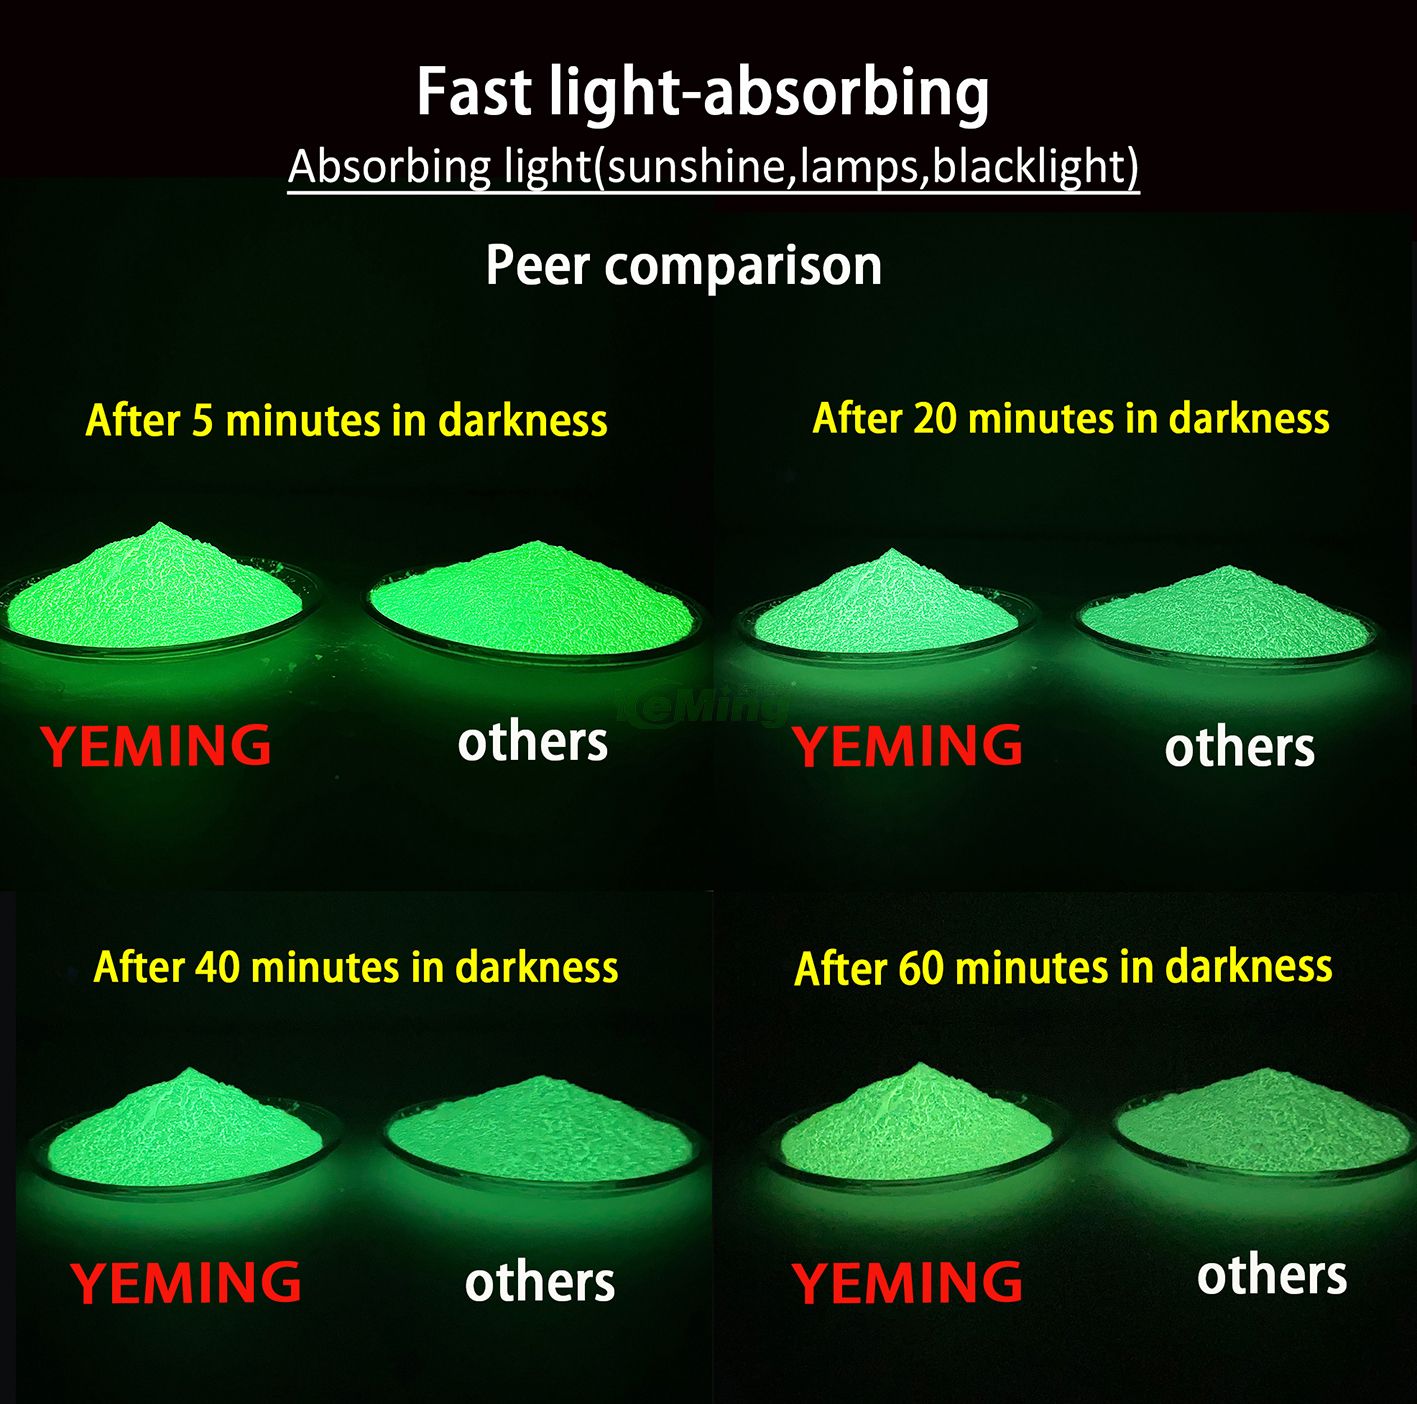 Non-toxic Luminous Pigment Strontium Aluminate Green Glow In The Dark Powder for Resin